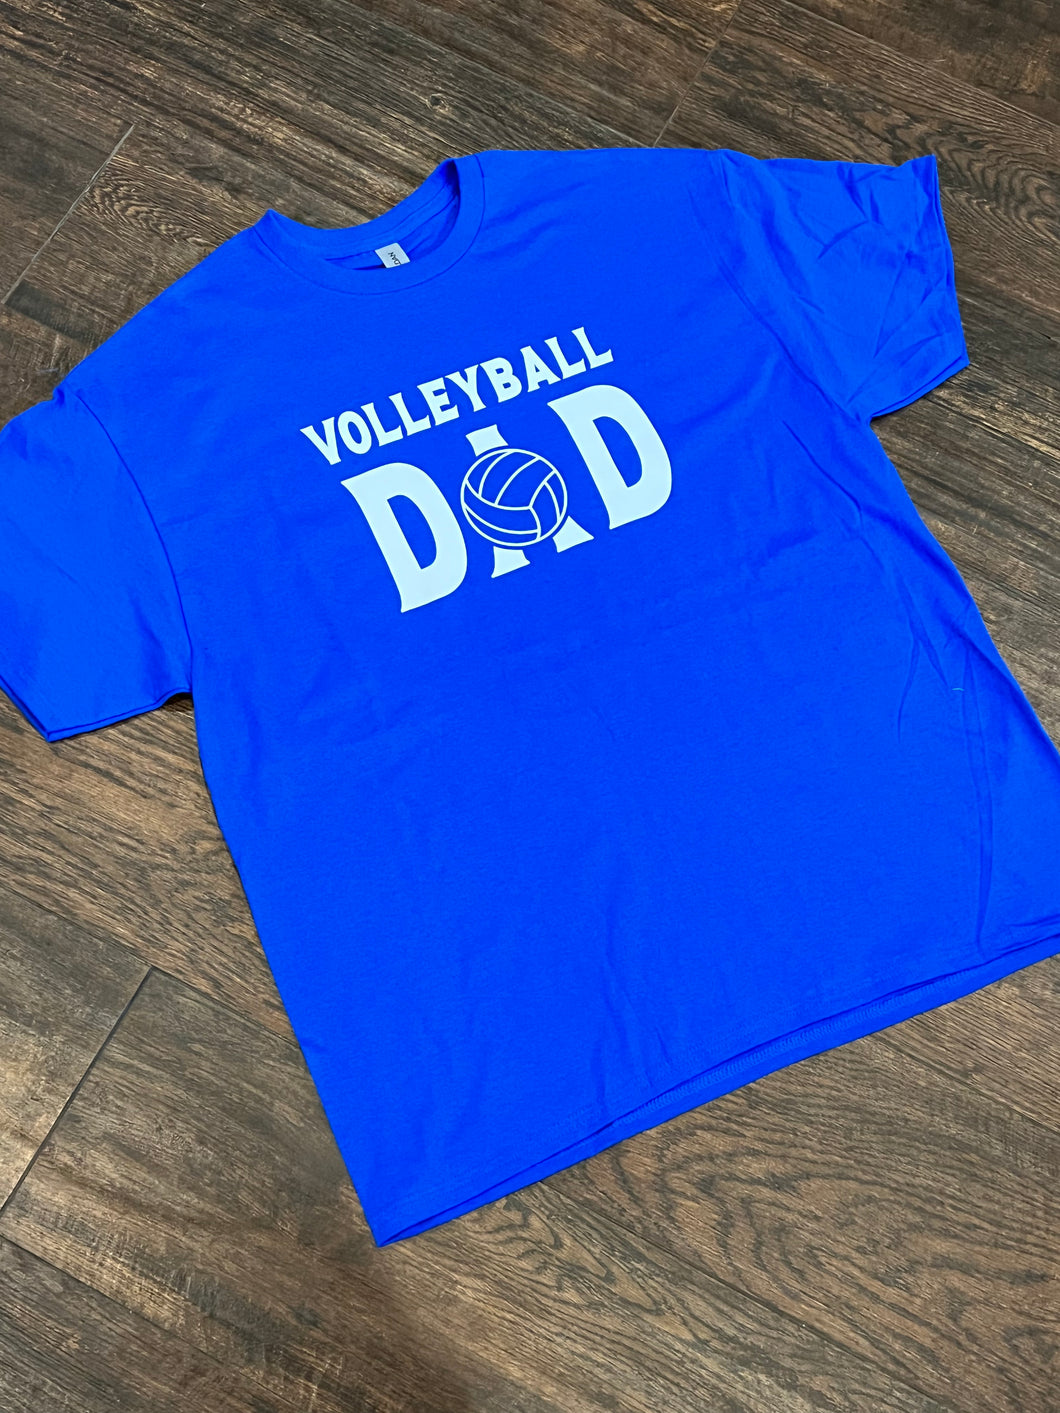 Volleyball Dad Tee